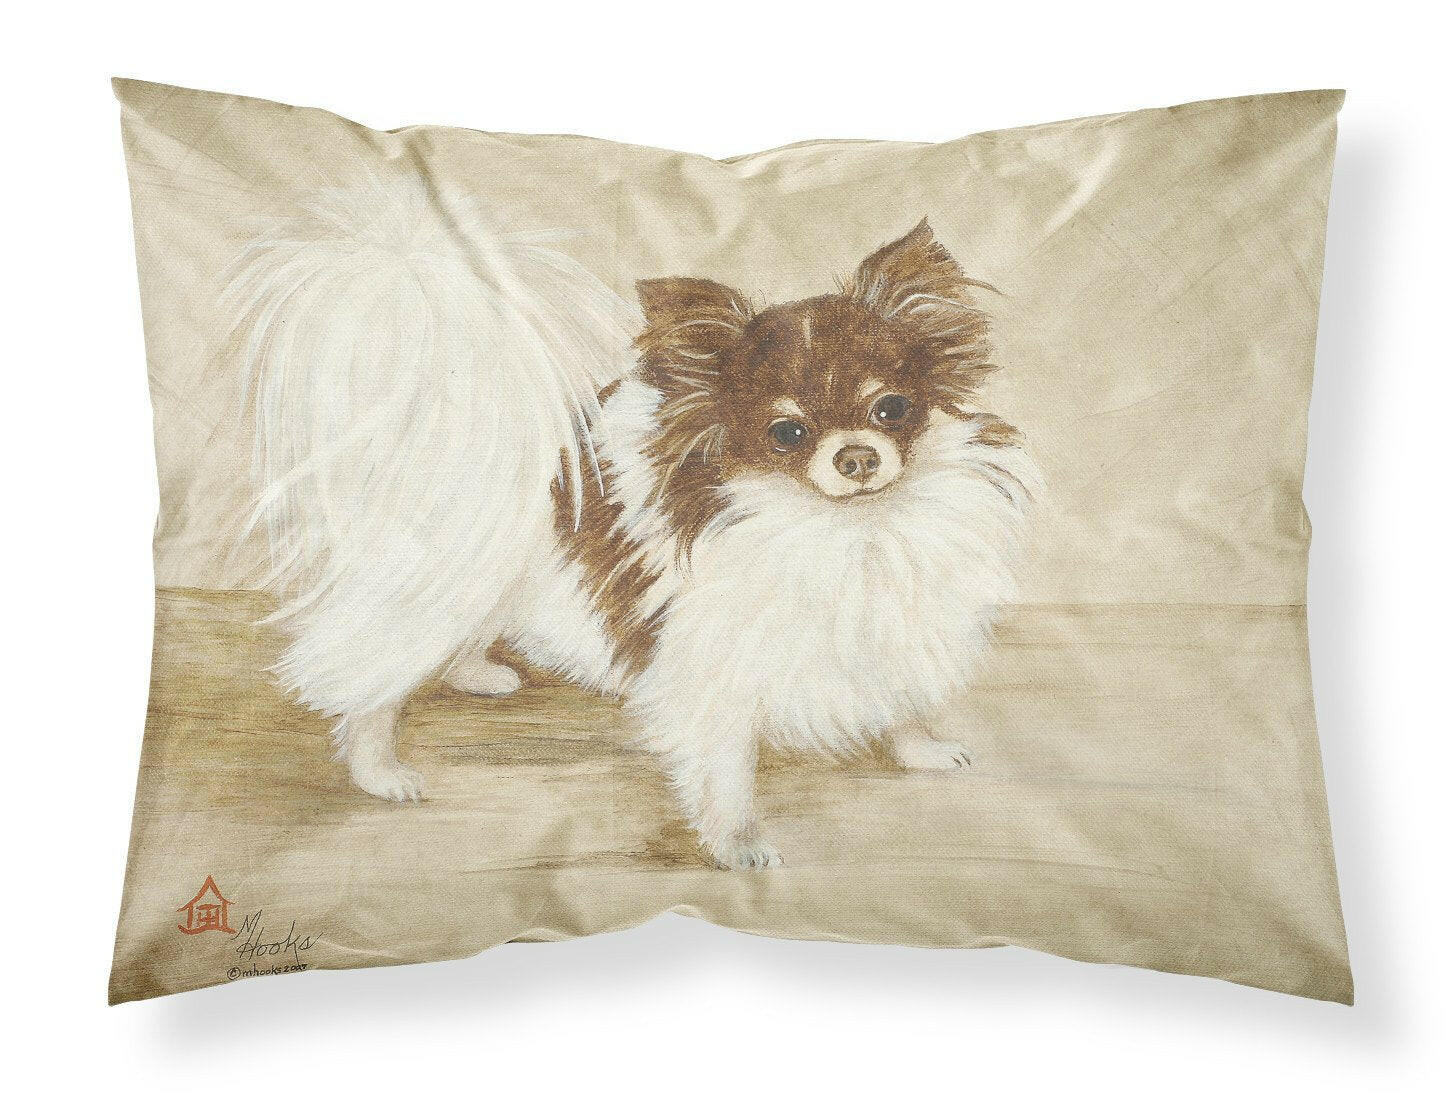 Chihuahua Favorite Flavors Fabric Standard Pillowcase MH1051PILLOWCASE by Caroline's Treasures